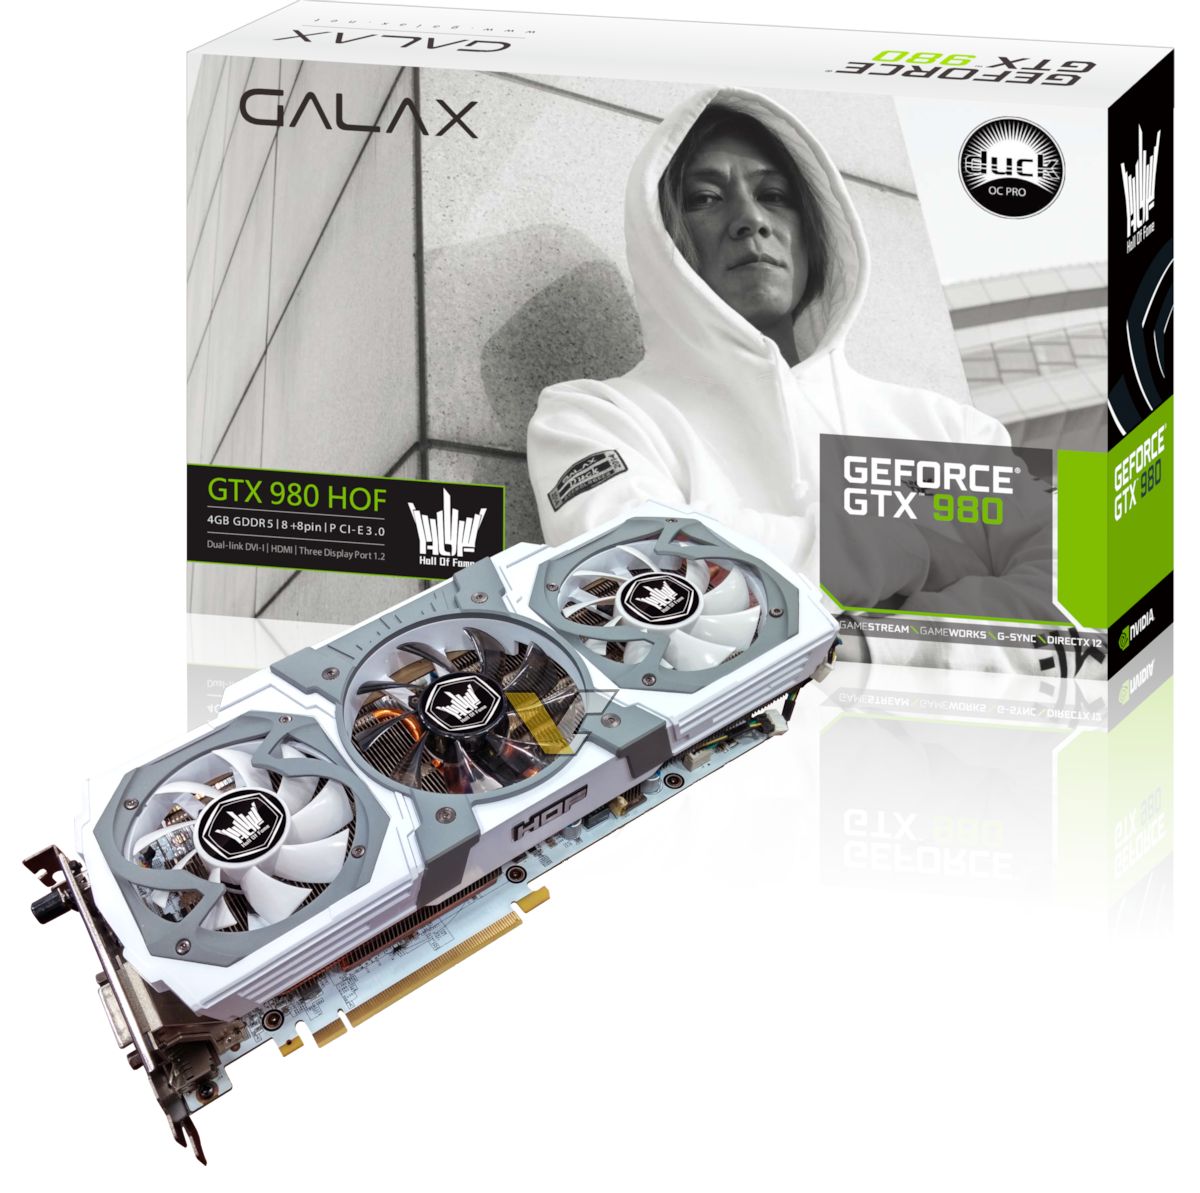 GALAX-GeForce-GTX-980-HOF-DUCK-Edition-1